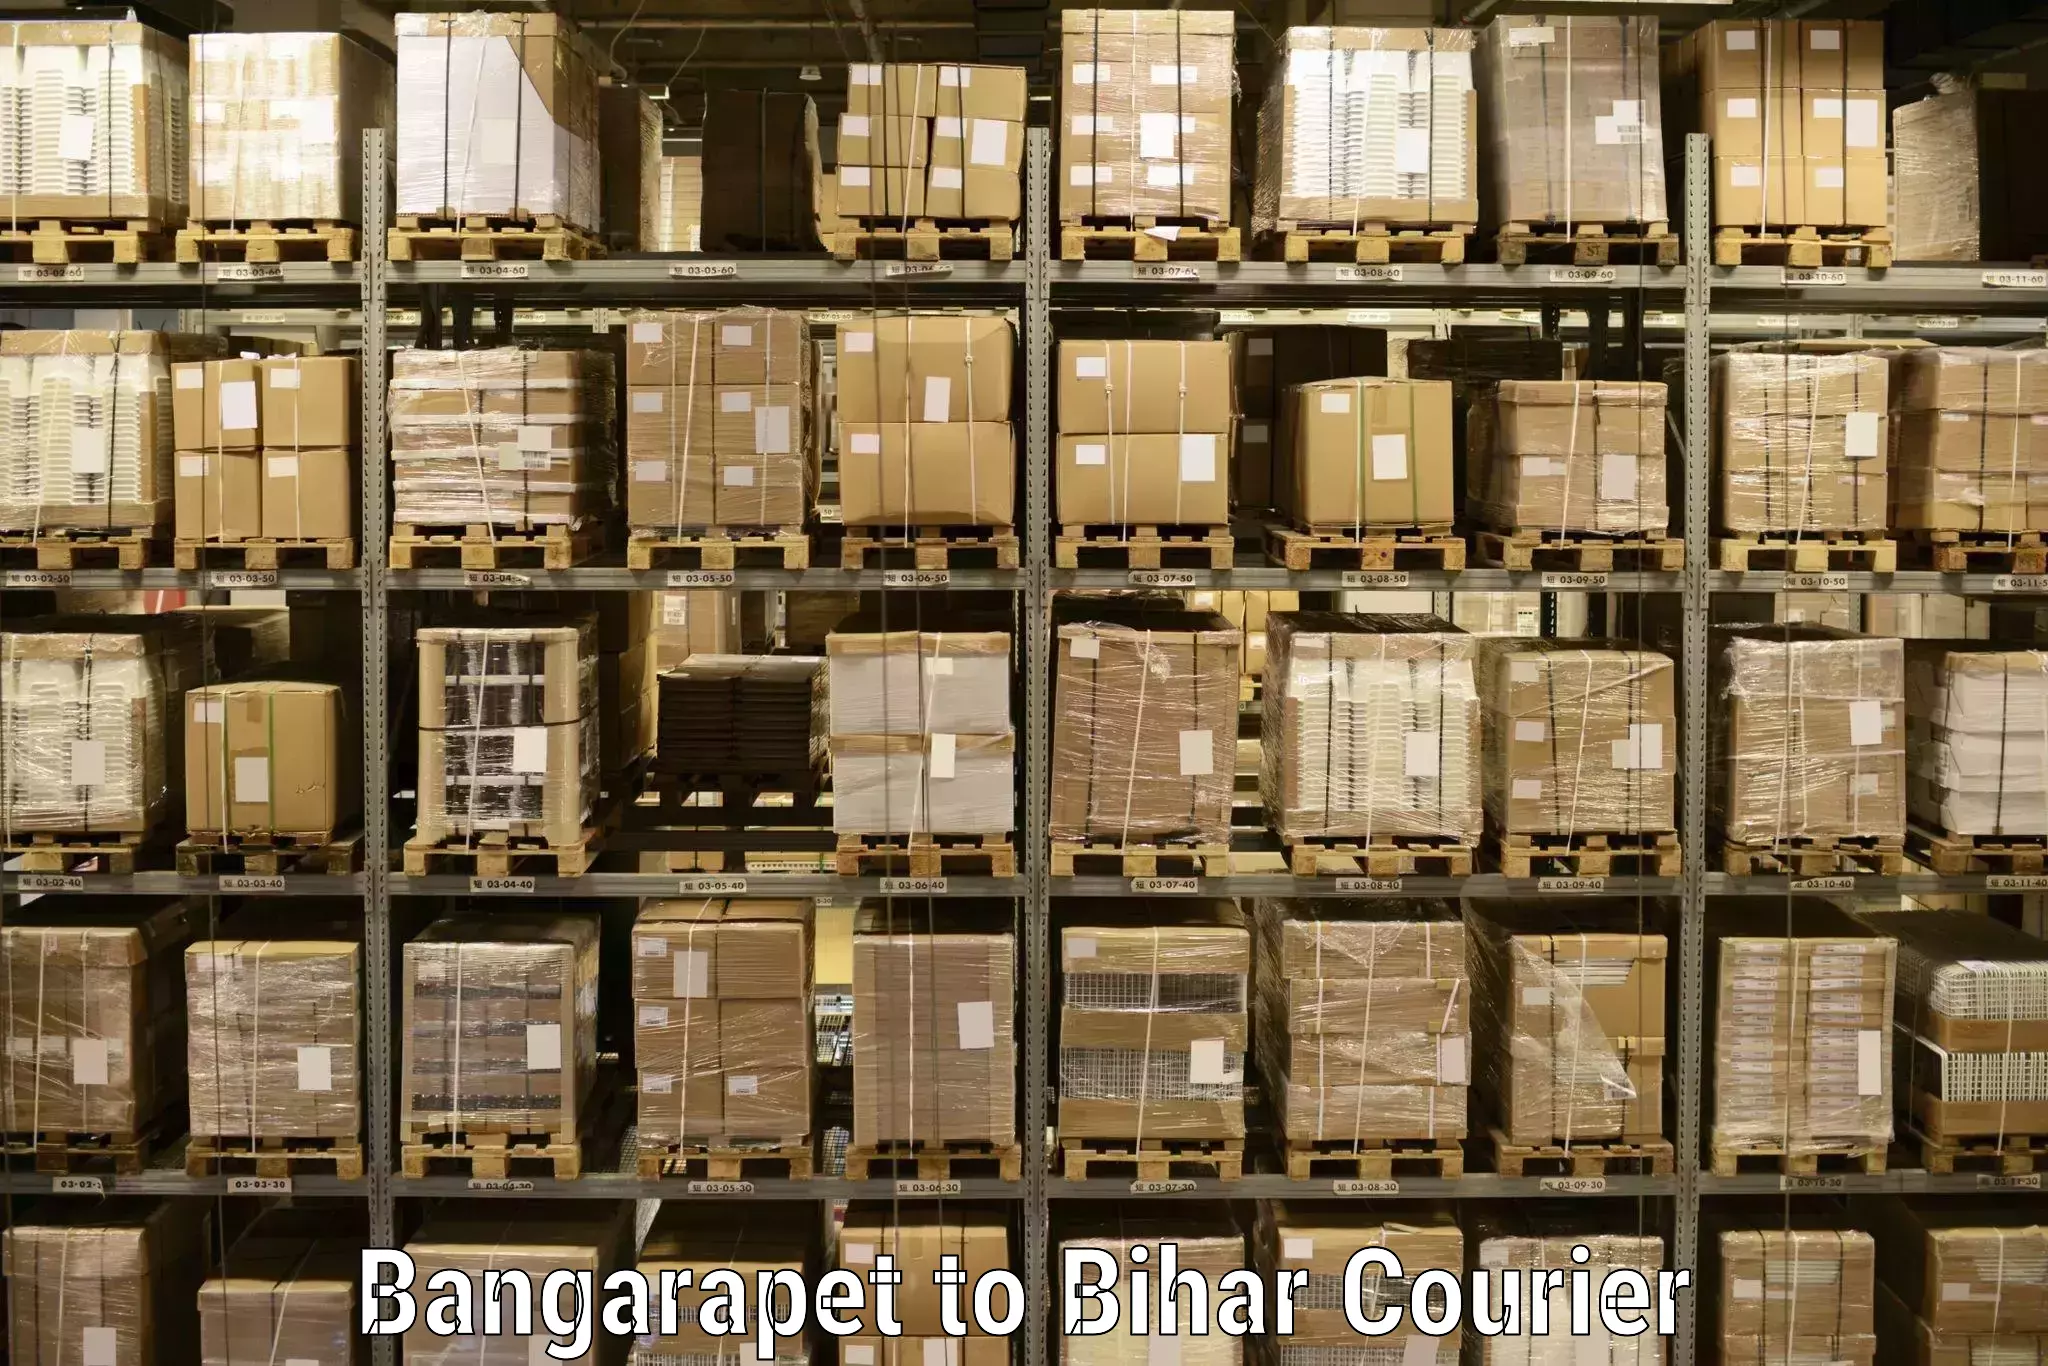 Courier service innovation Bangarapet to Sultanganj